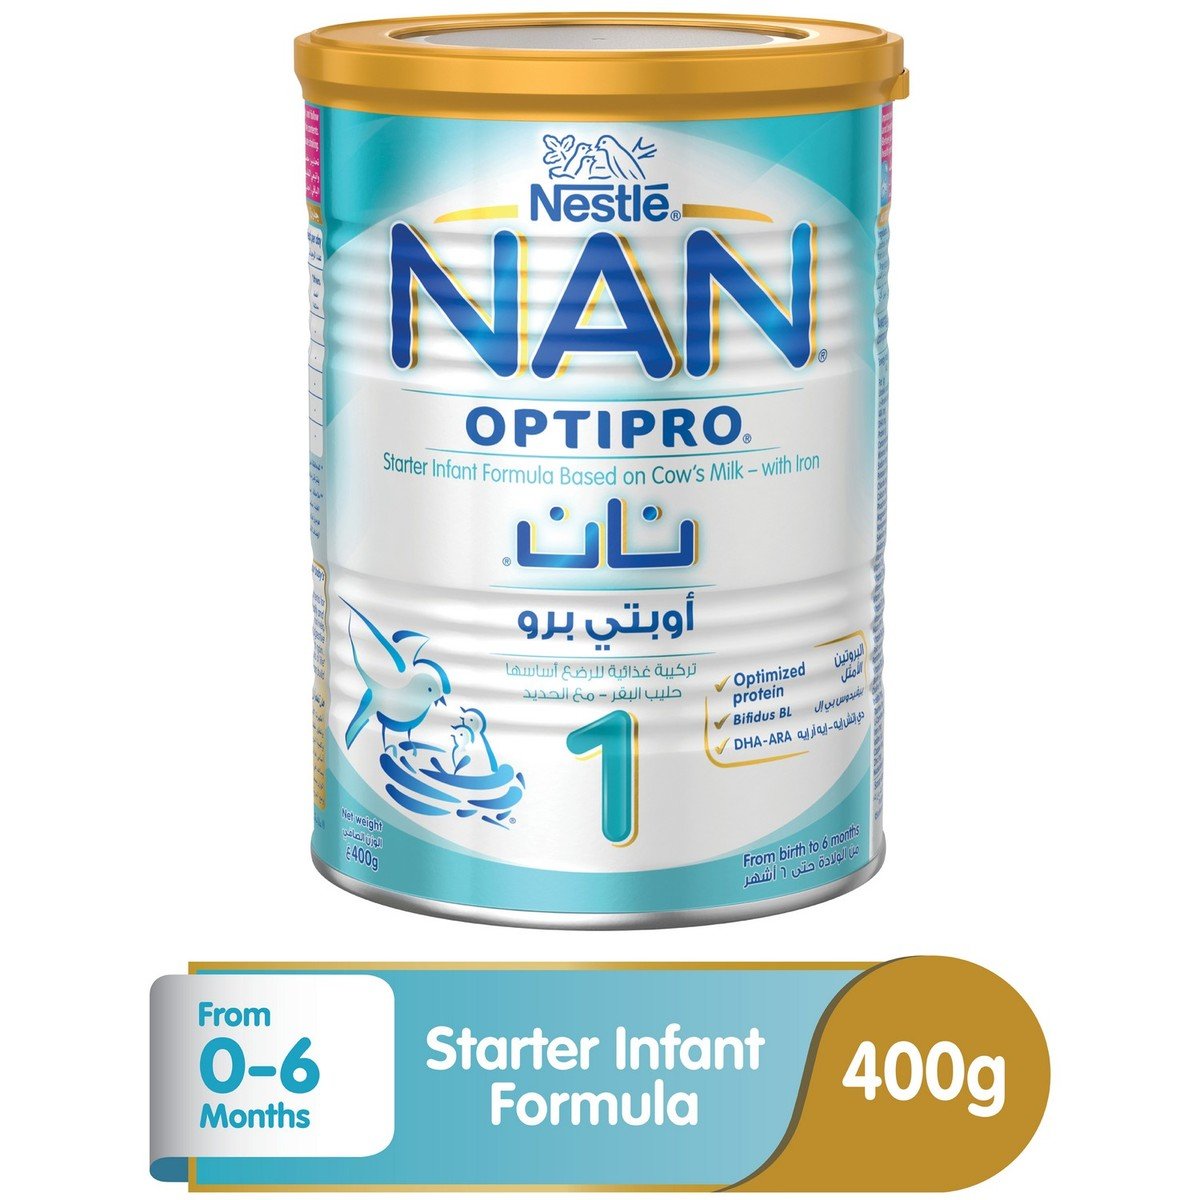 Buy Nestle Nan Supremepro 1 Starter From Birth Premium Infant Formula  online at